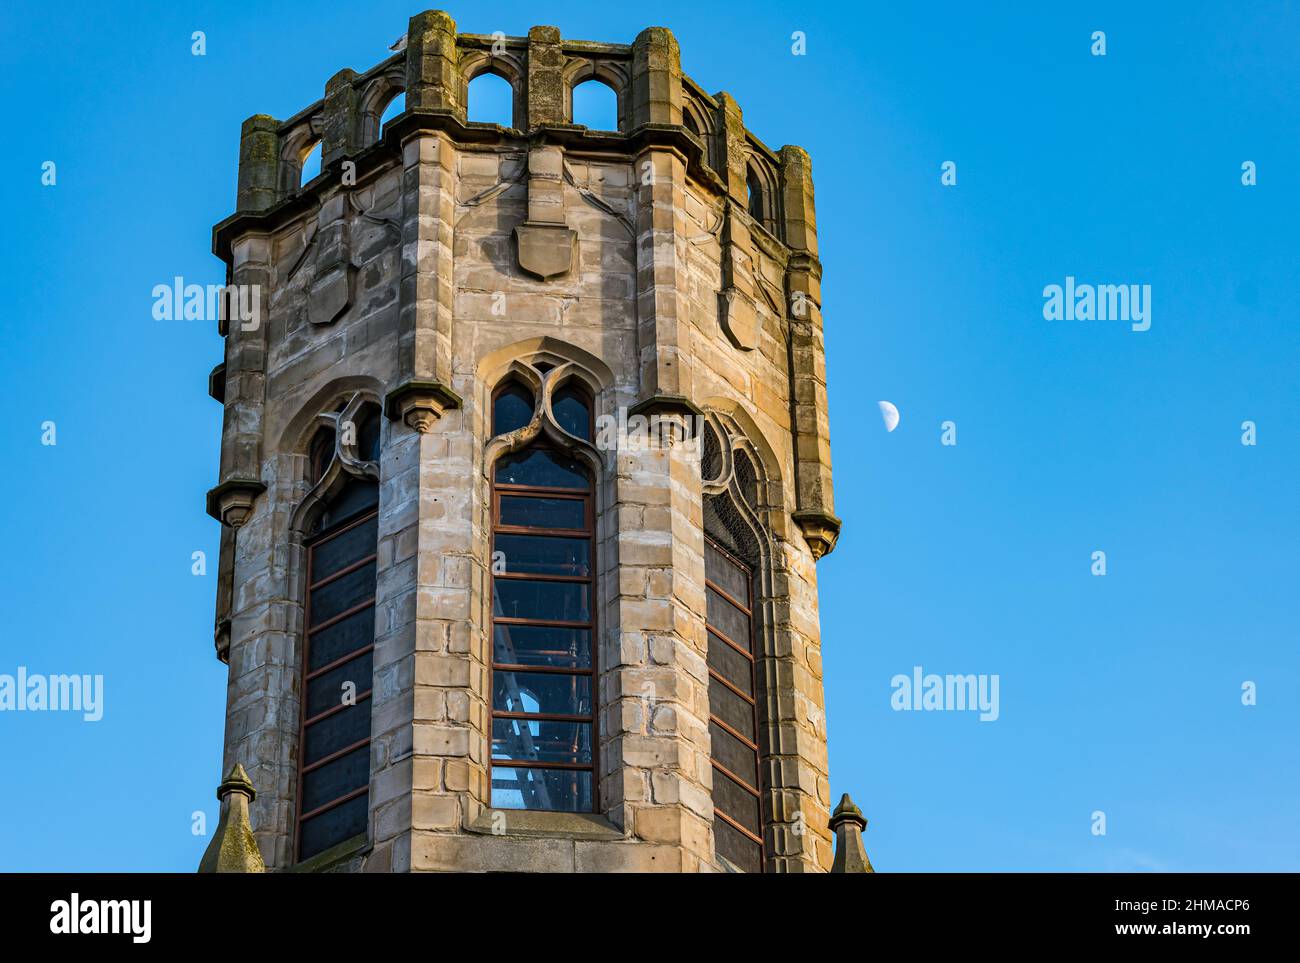 Hexagonal church tower with a half moon visible in bright blue sky, Leith, Edinburgh, Scotland, UK Stock Photo